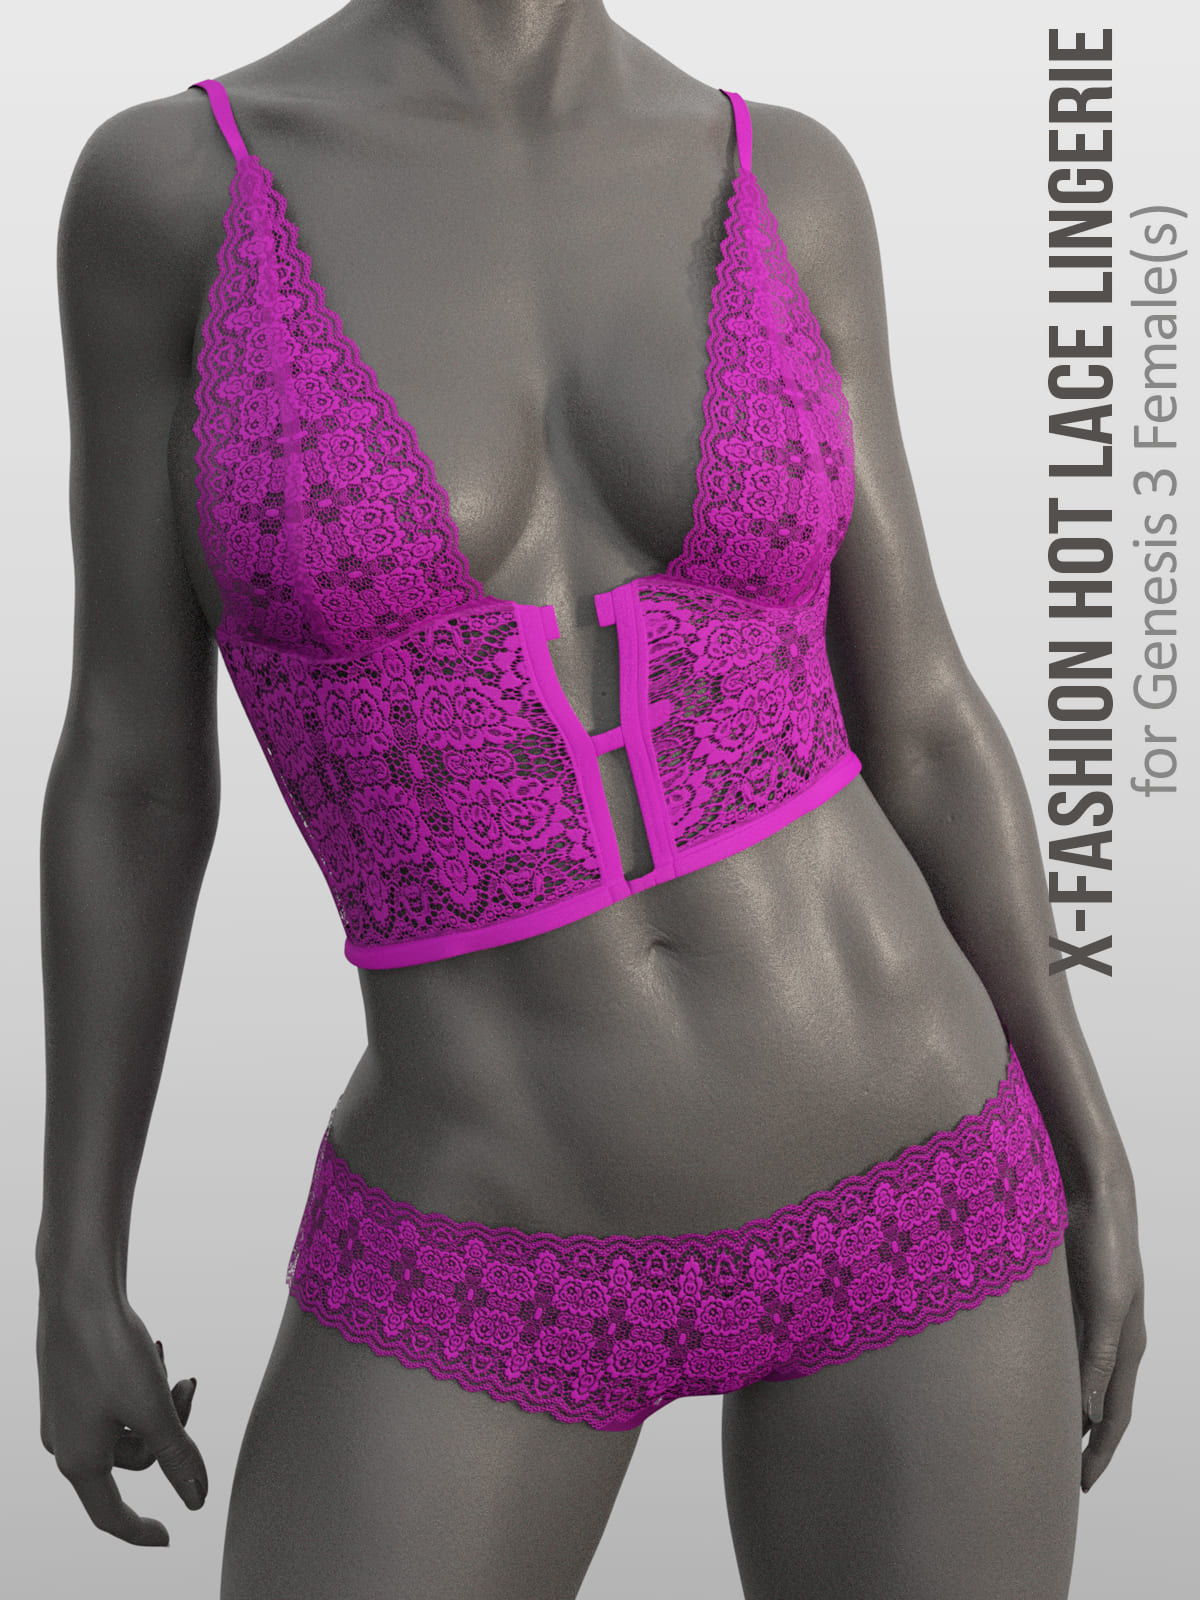 X-Fashion Hot Lace Lingerie for Genesis 8 Females_DAZ3D下载站